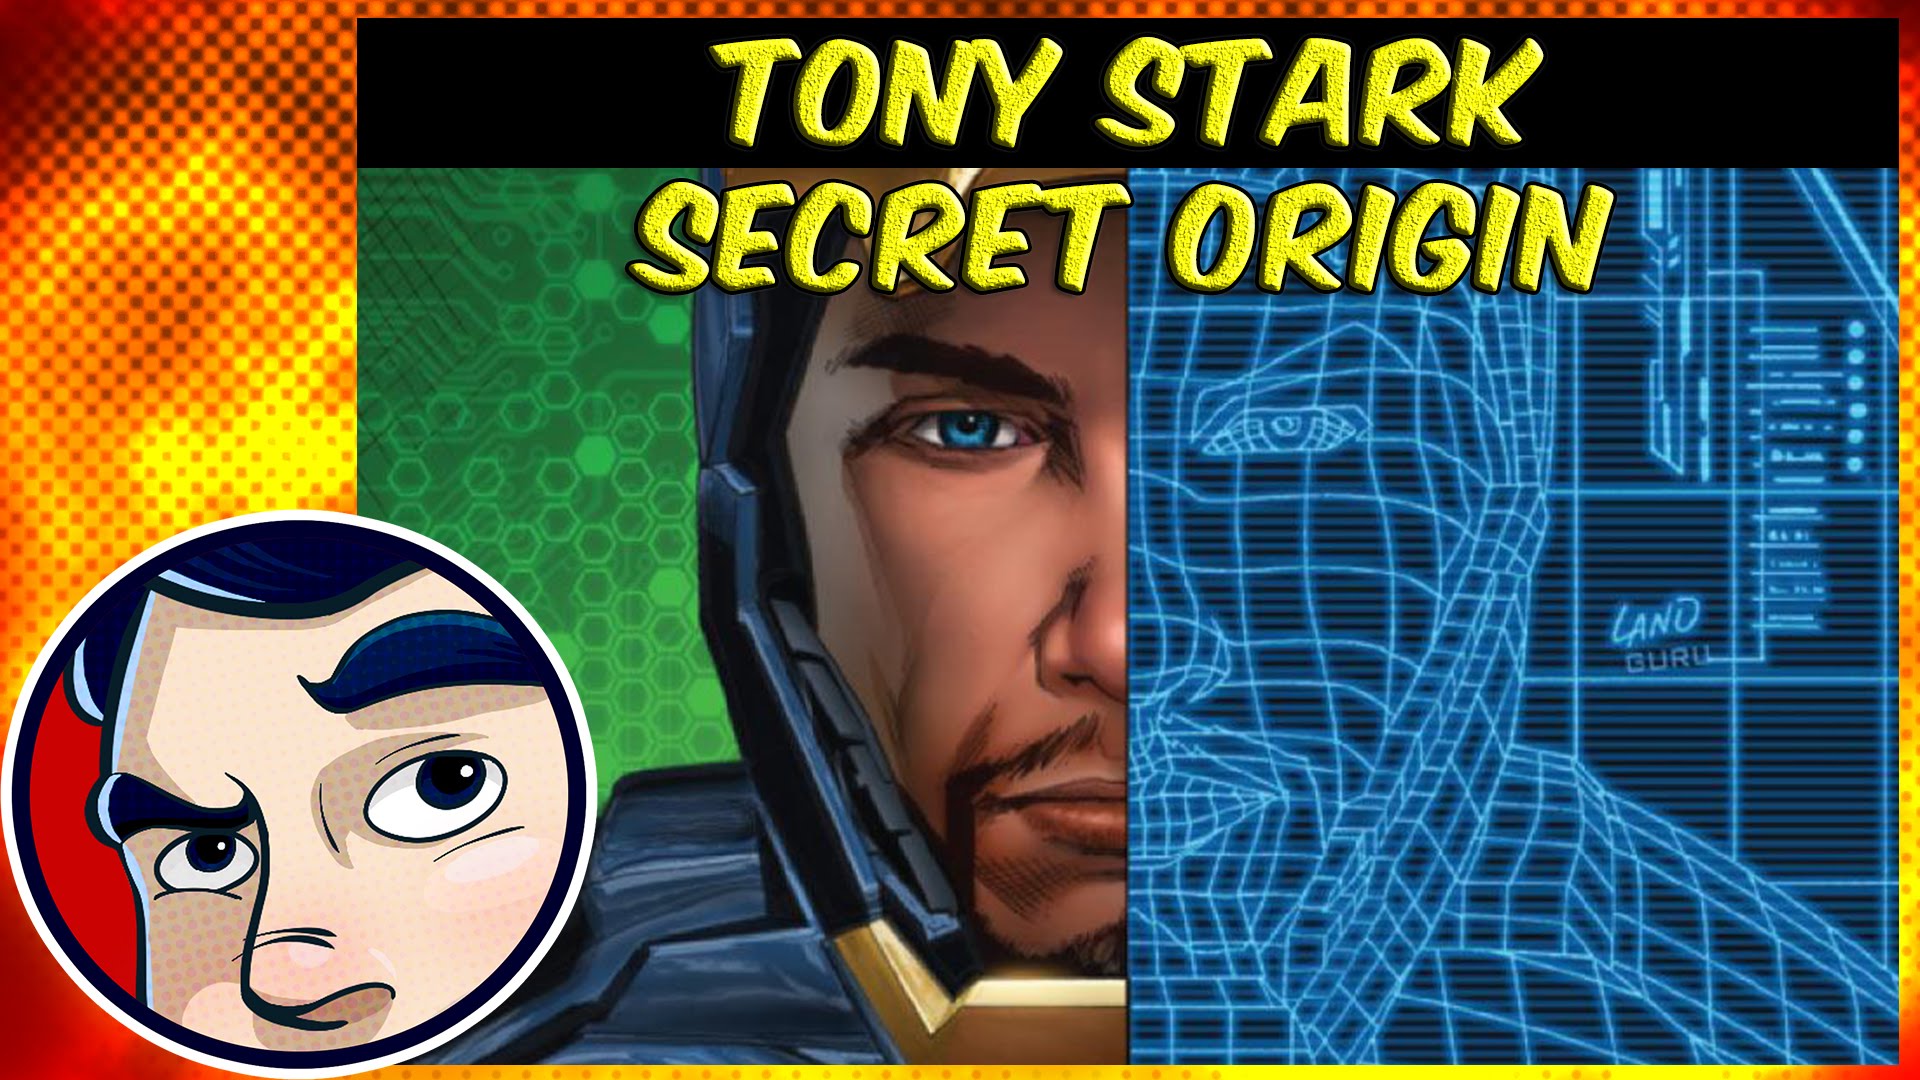 The Secret Origin of Tony Stark (Iron Man)